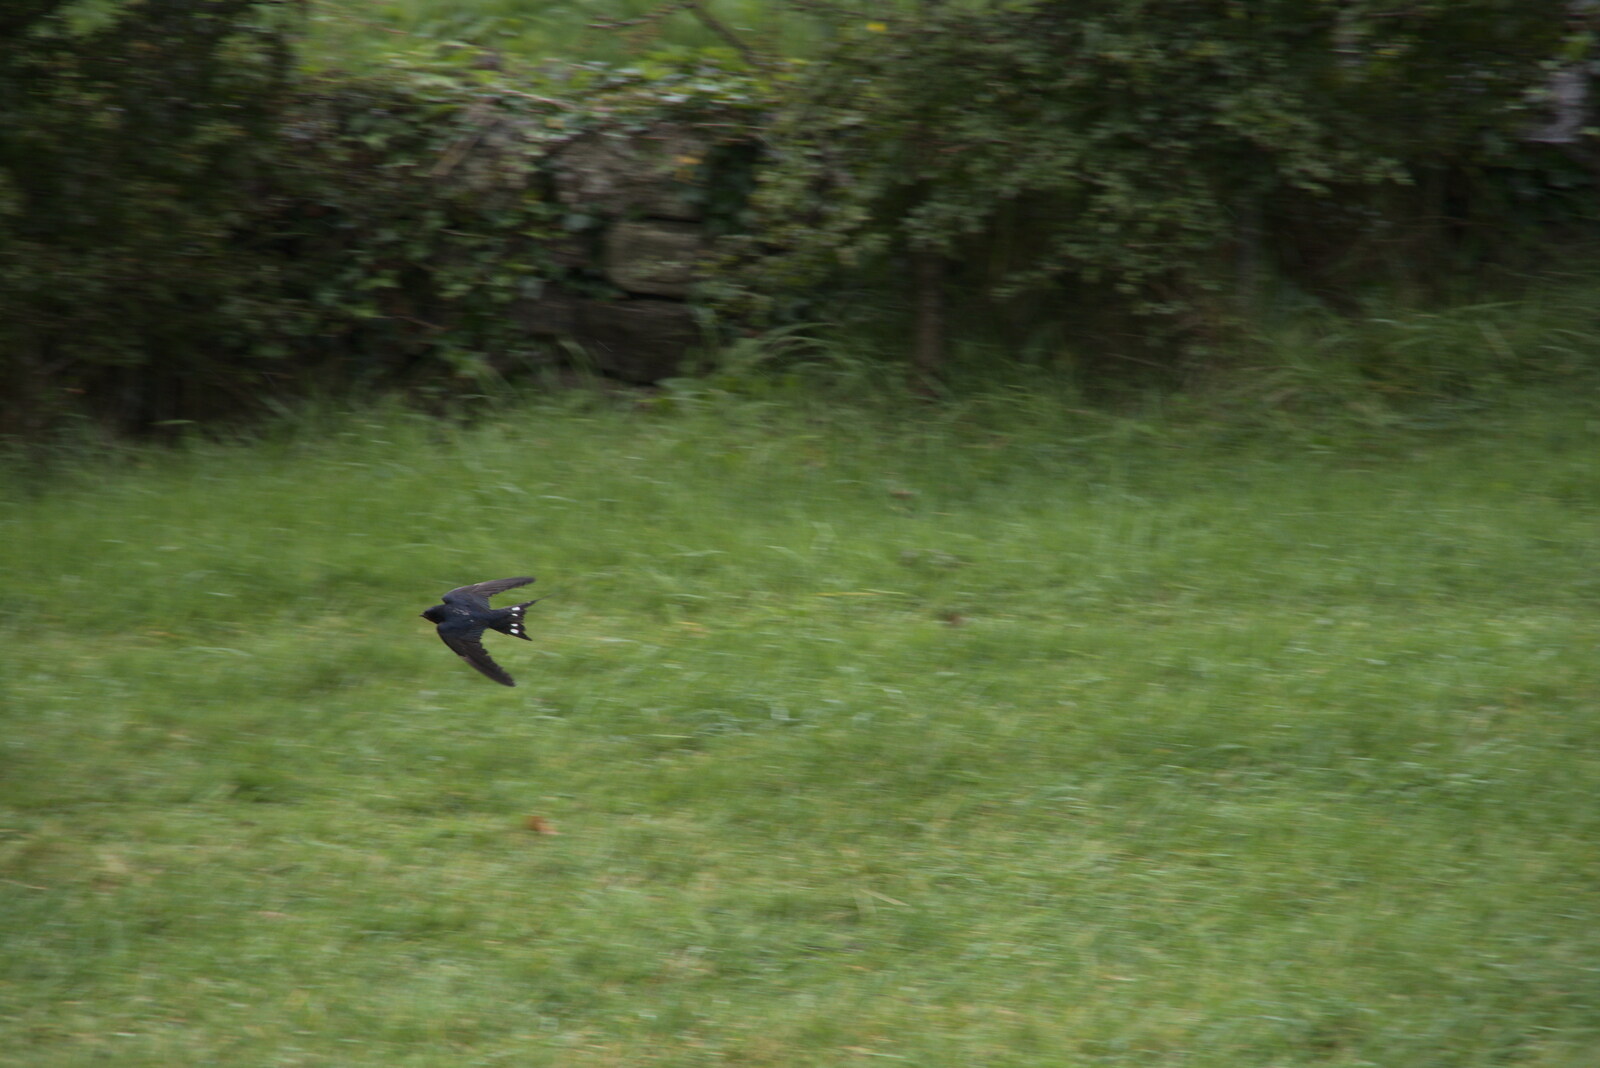 A swallow whirls around at high speed from Walks Around Benbulben and Carrowmore, County Sligo, Ireland - 13th August 2021